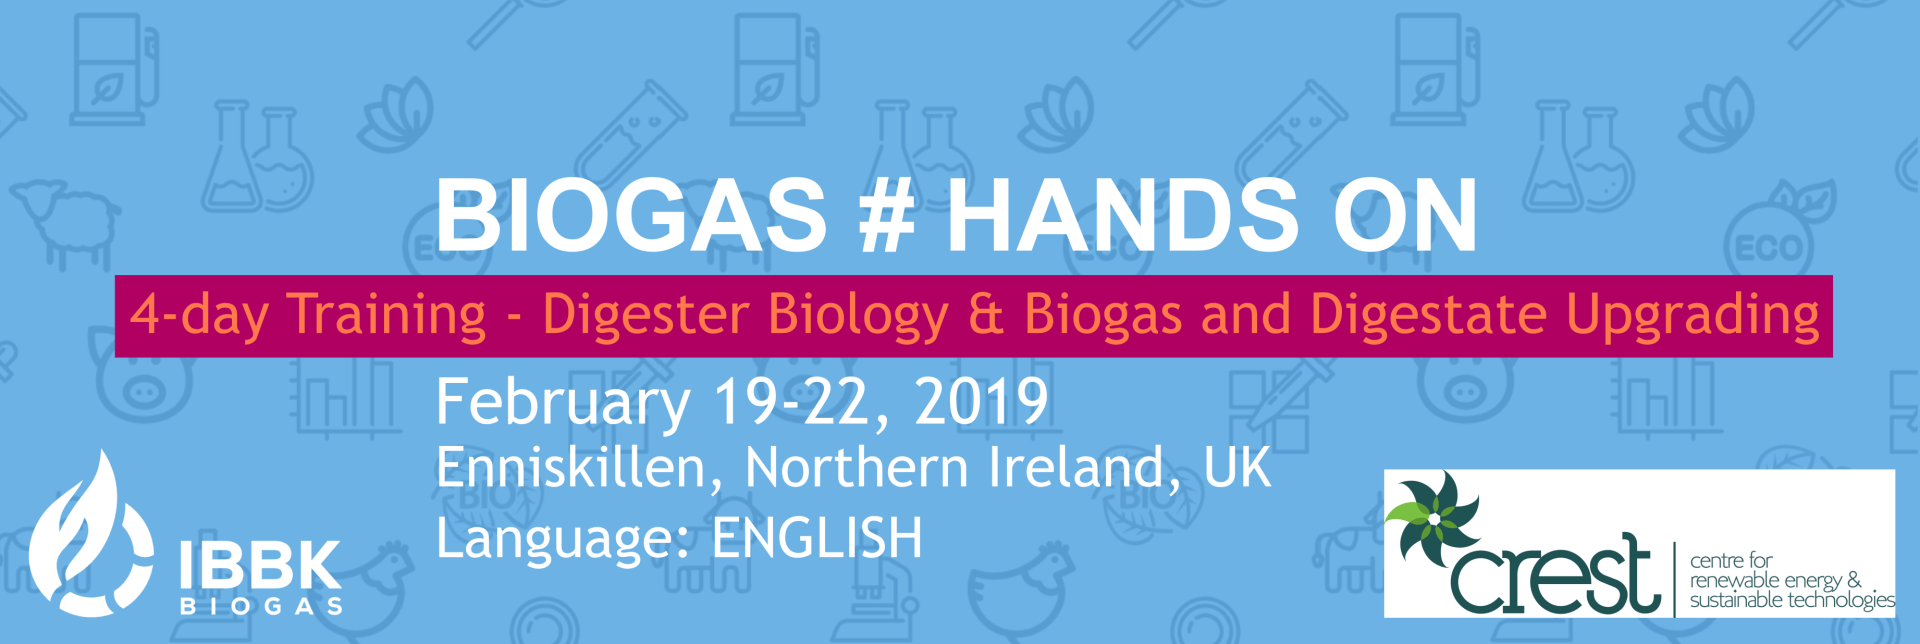 Biogas #Hands On Training - February 2019, Enniskillen, Northern Ireland